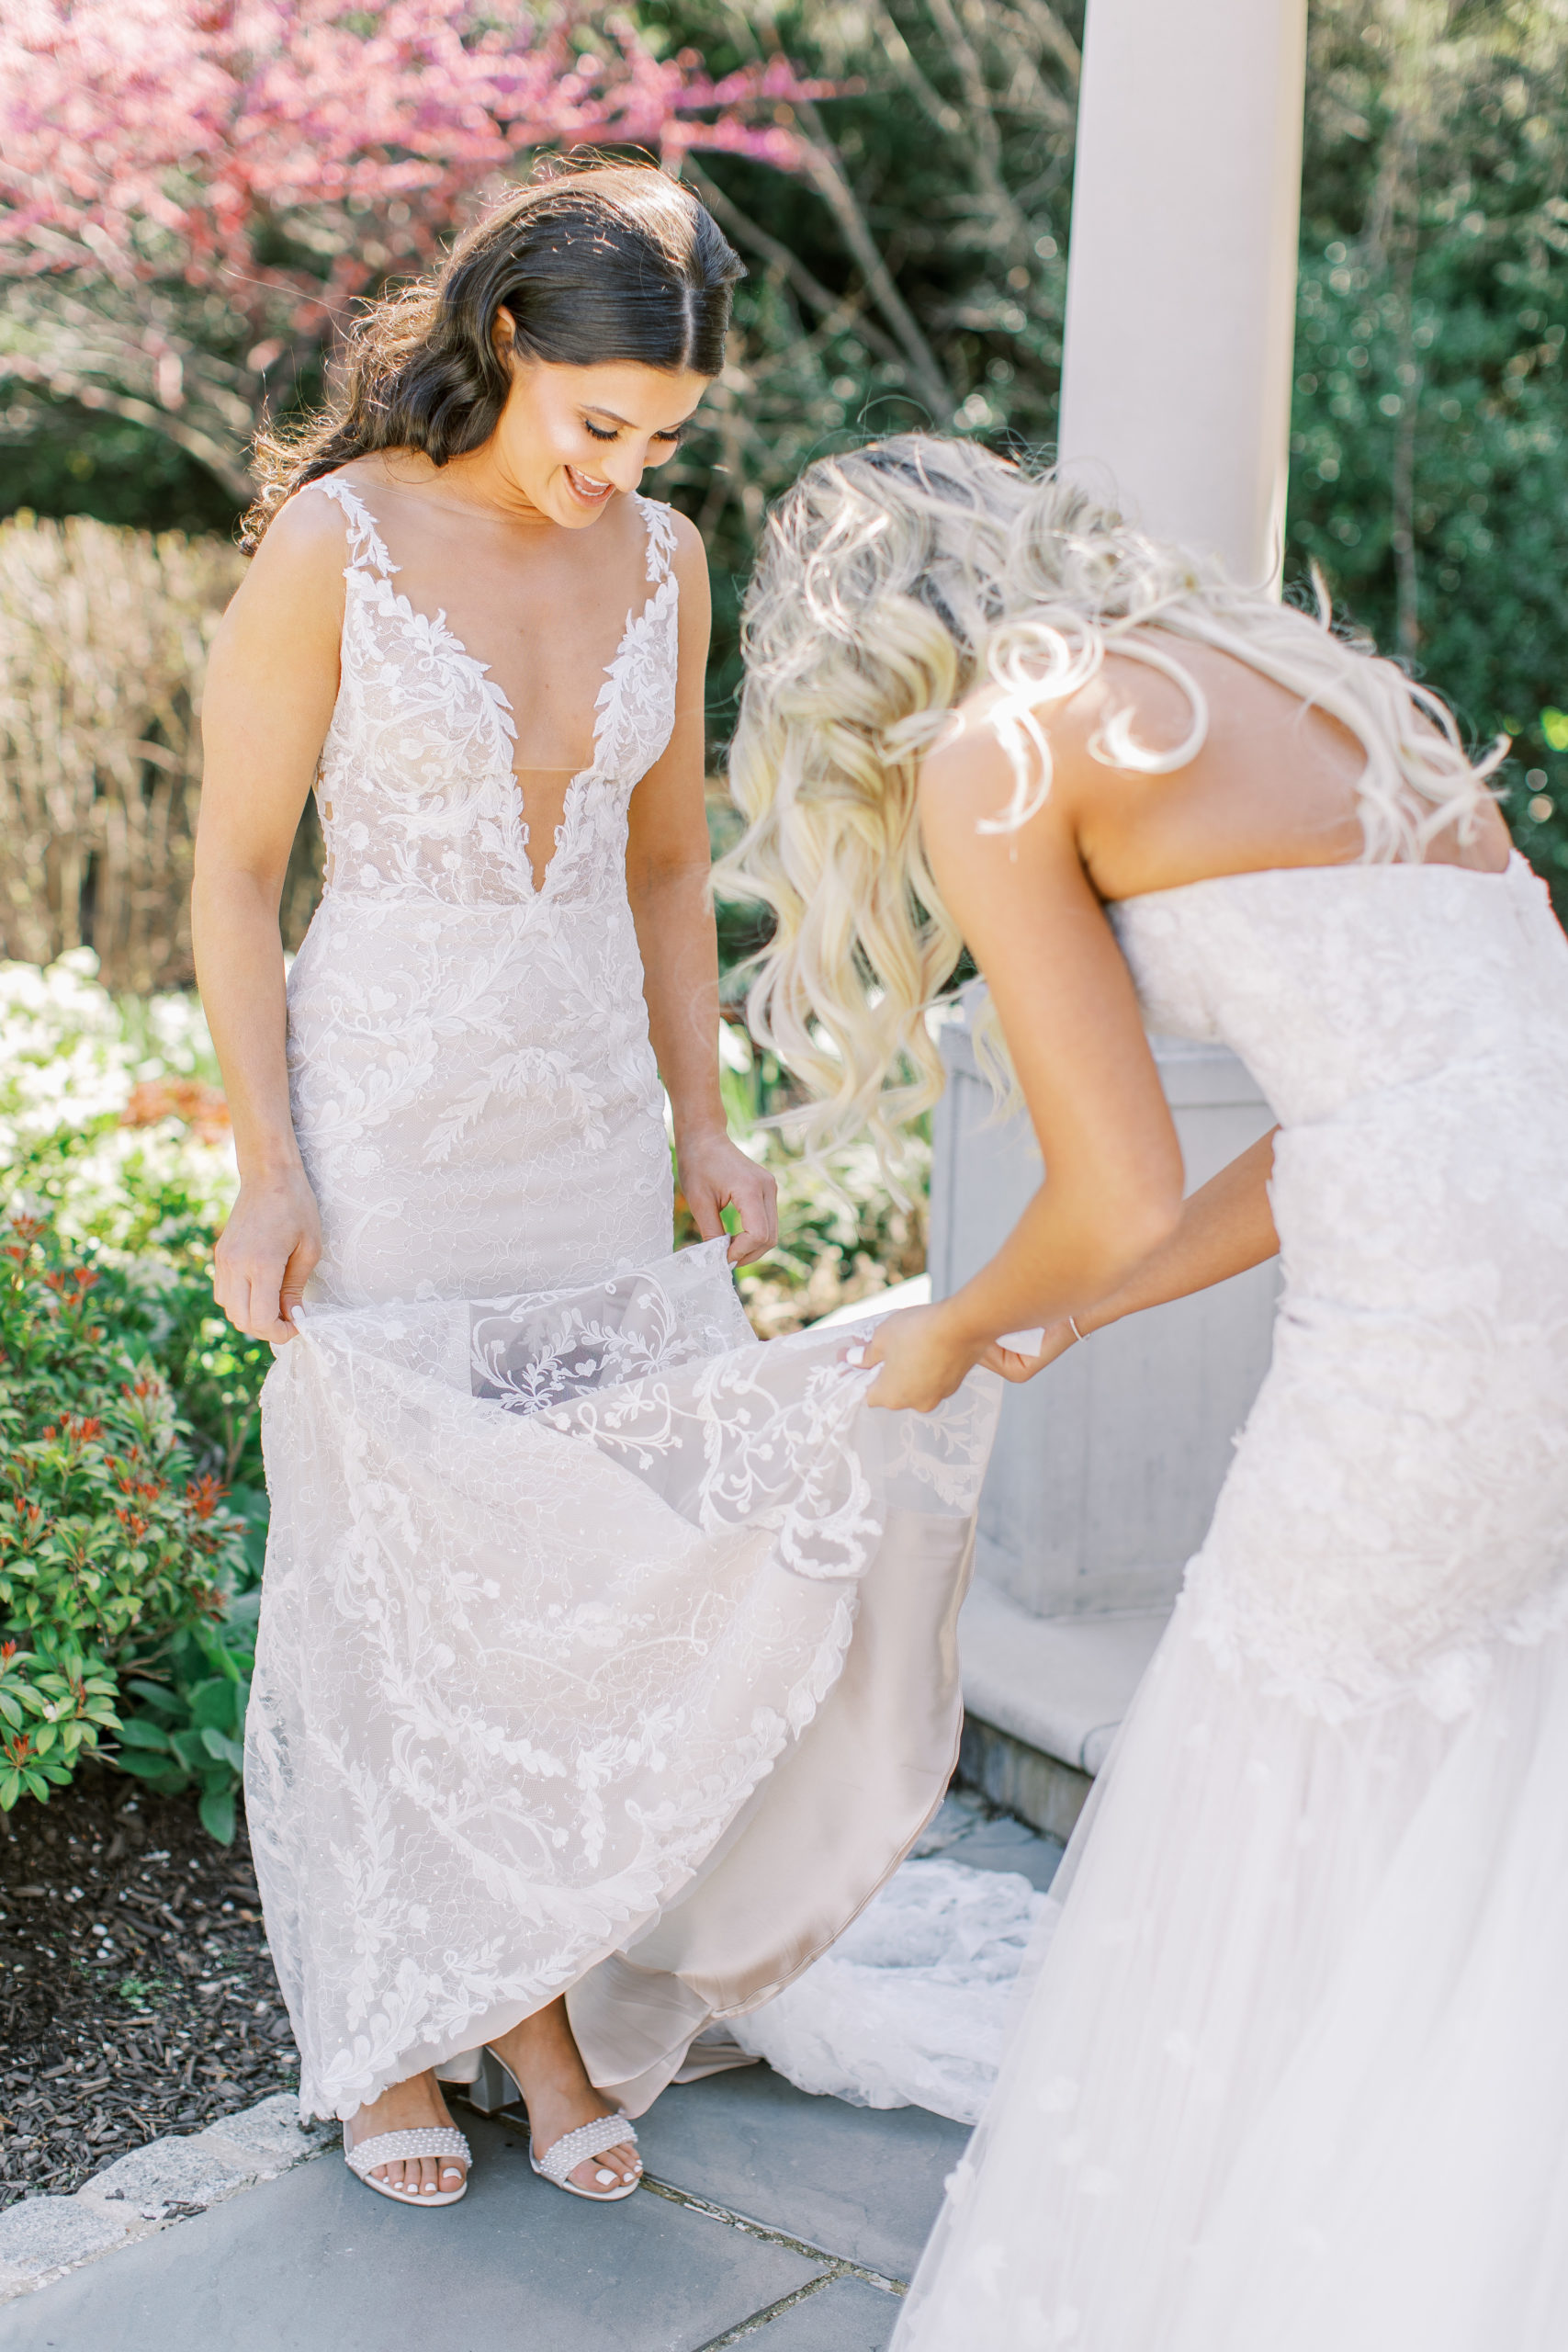 Brides smile and admire dresses in garden 